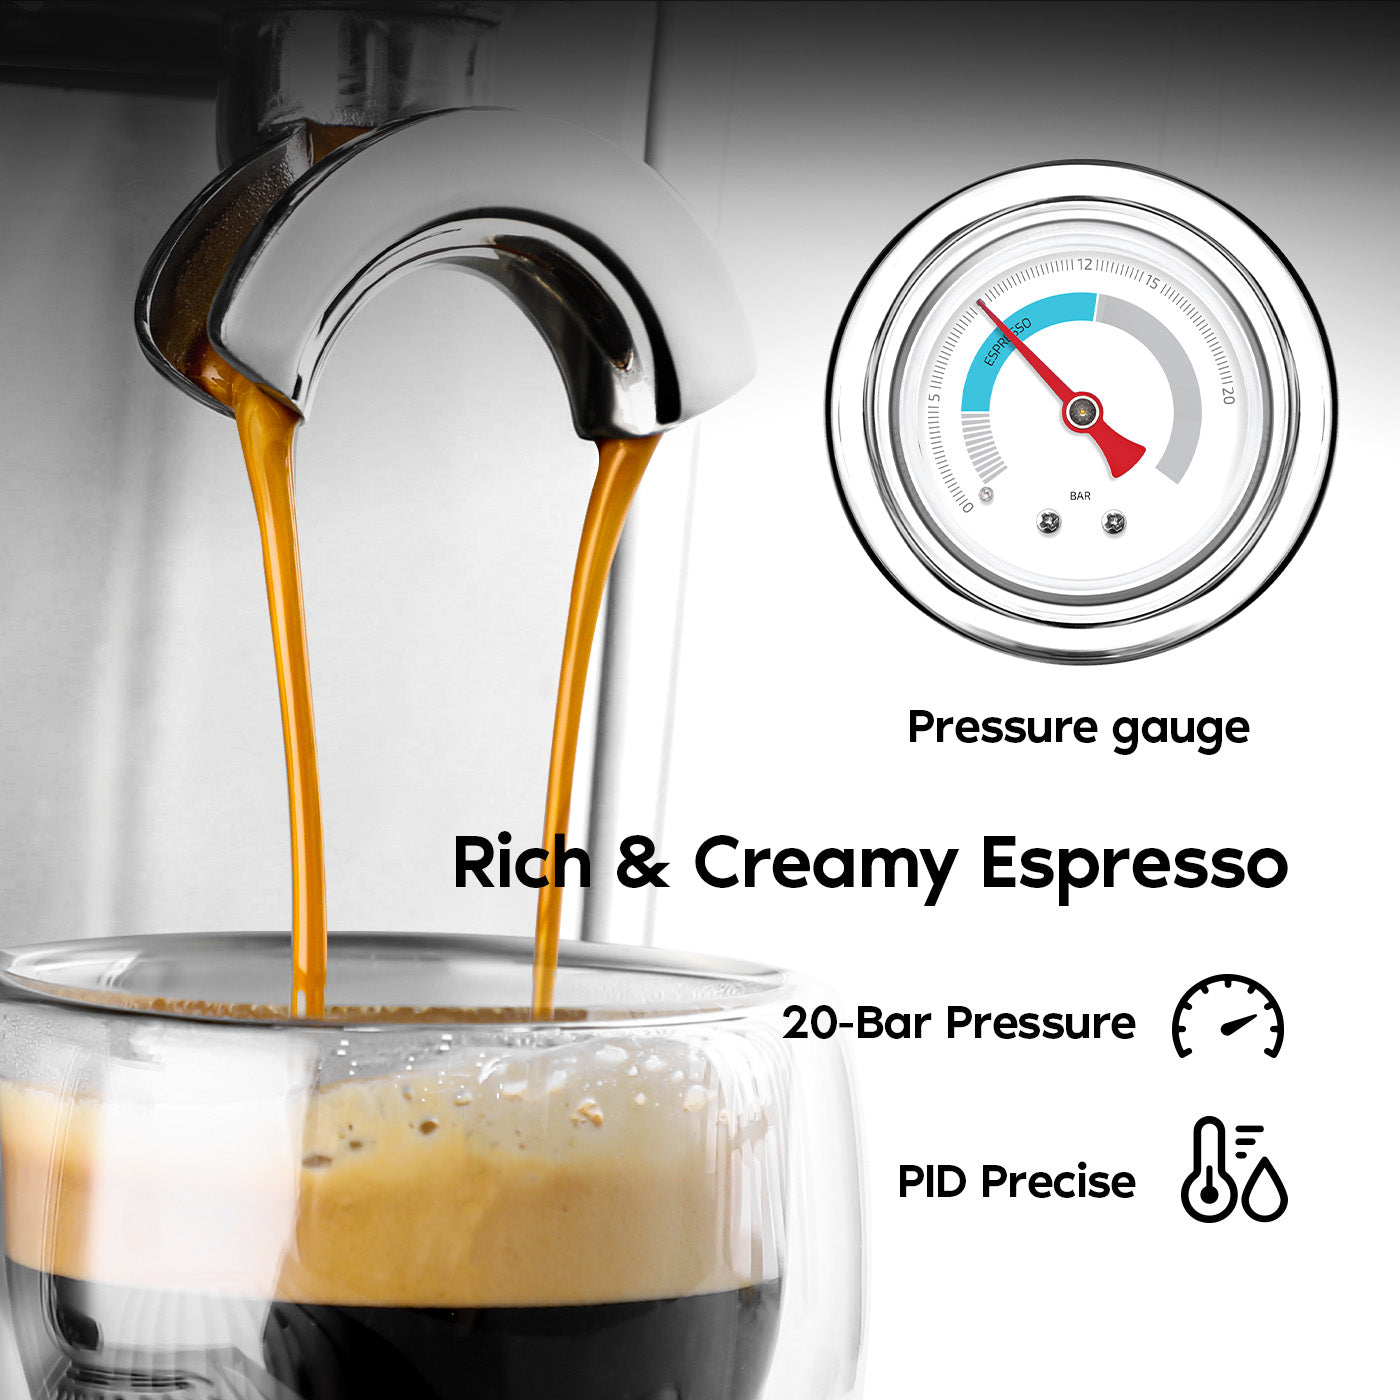 Casabrews All-in-One Espresso Machine Cappuccino Coffee Maker with